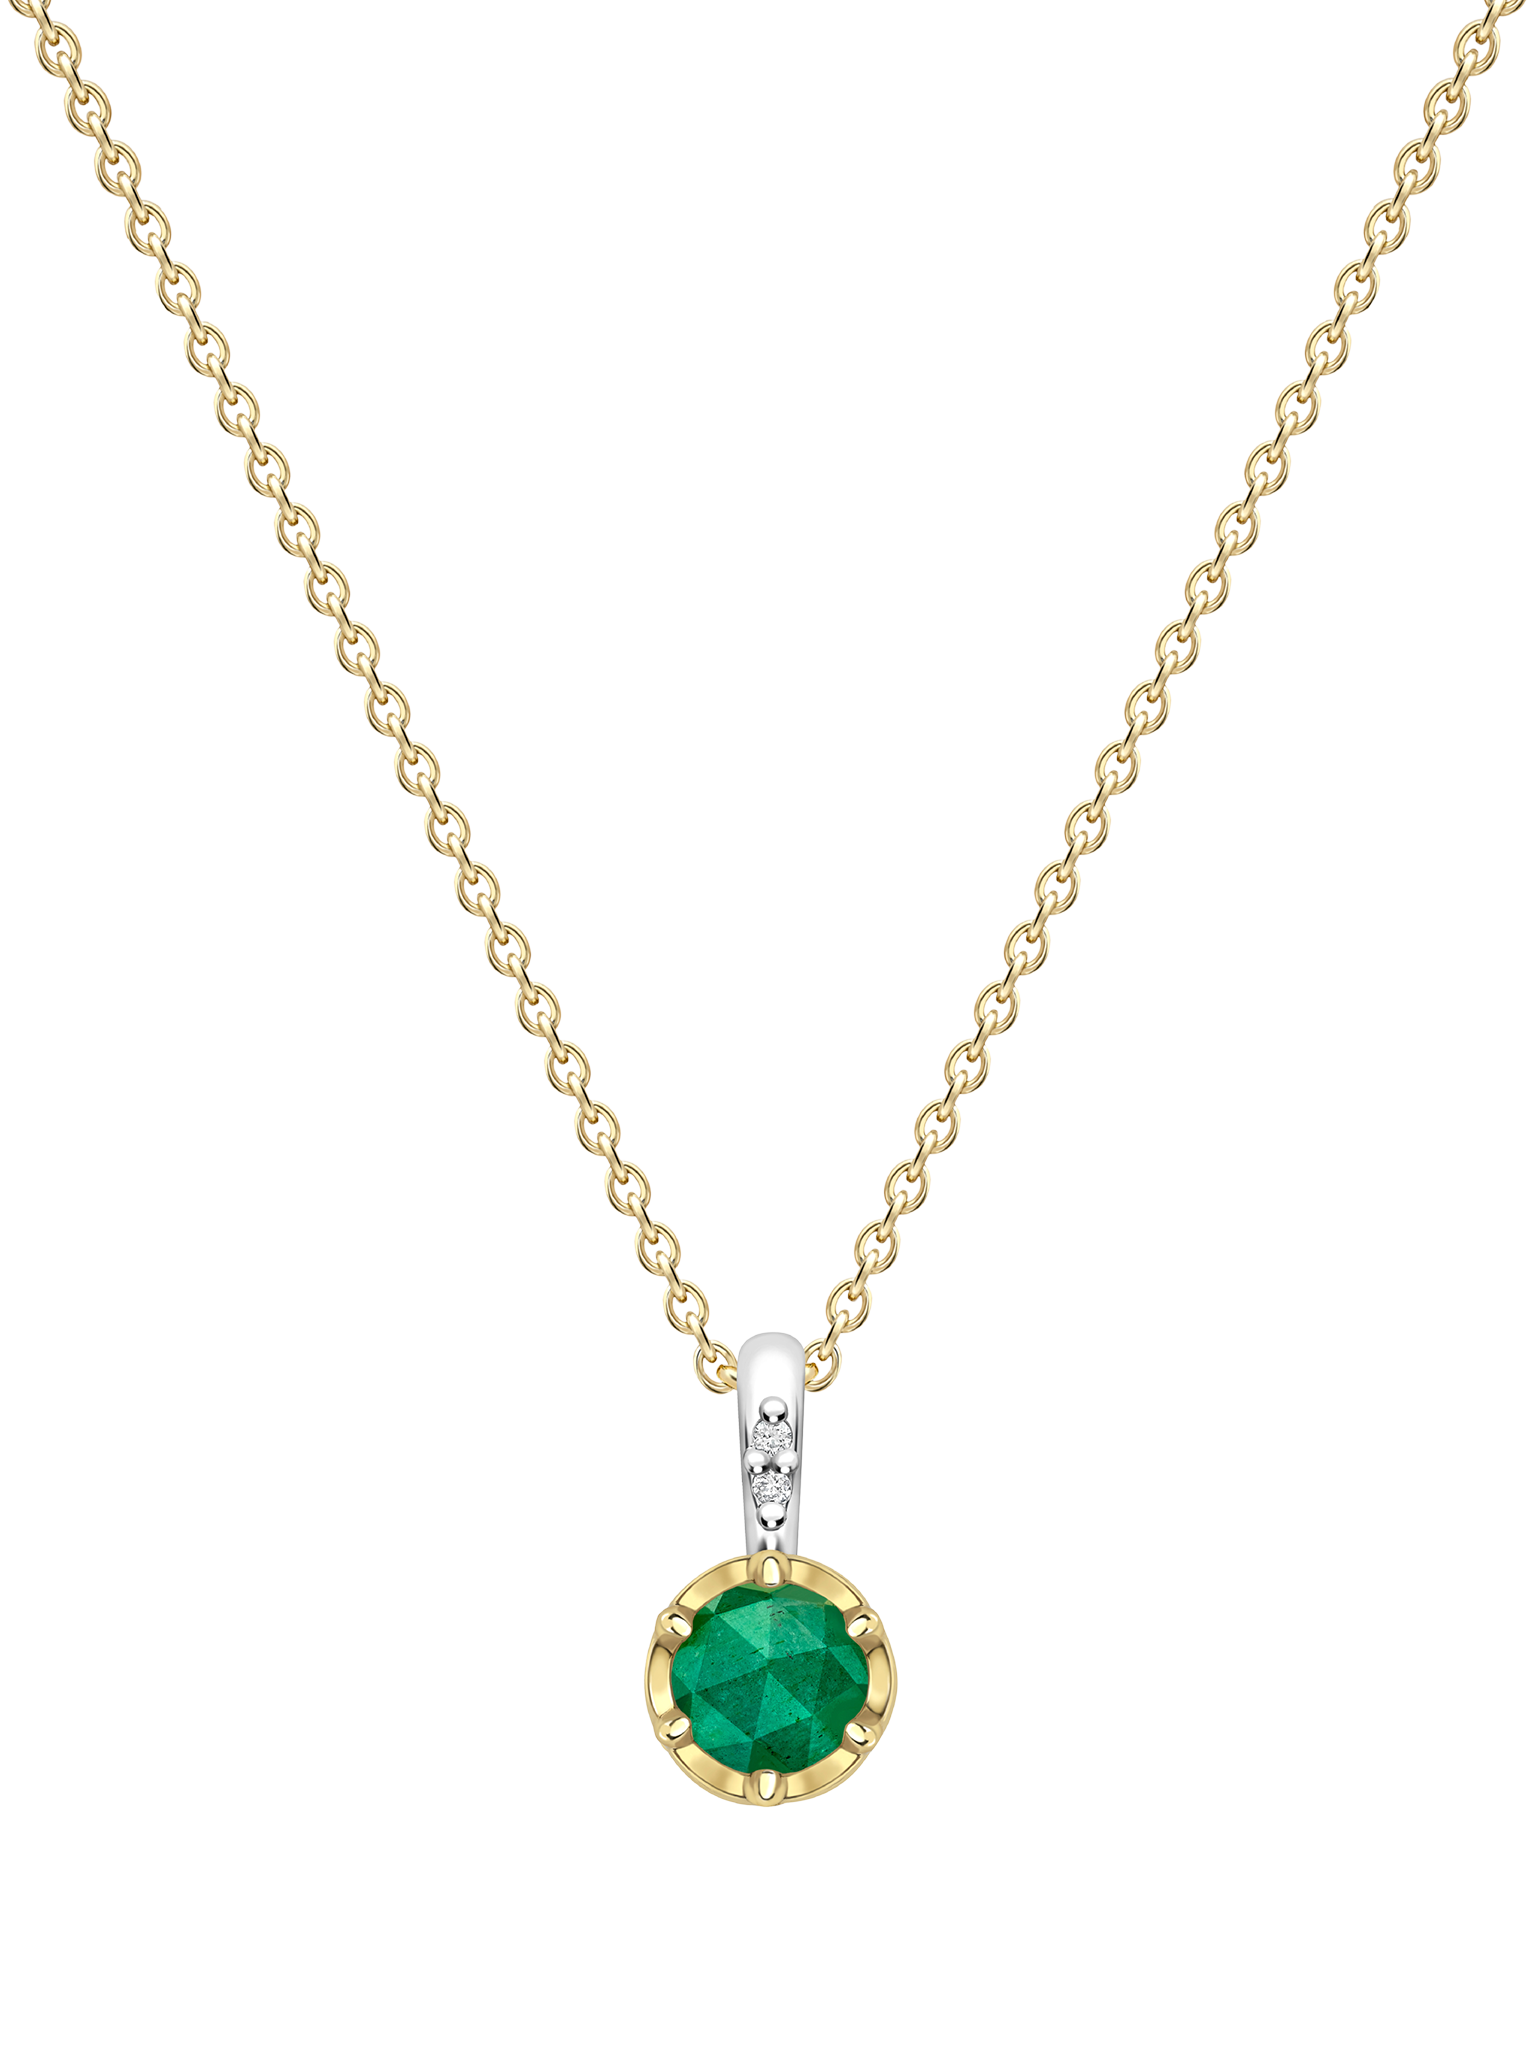 May emerald birthstone pendant